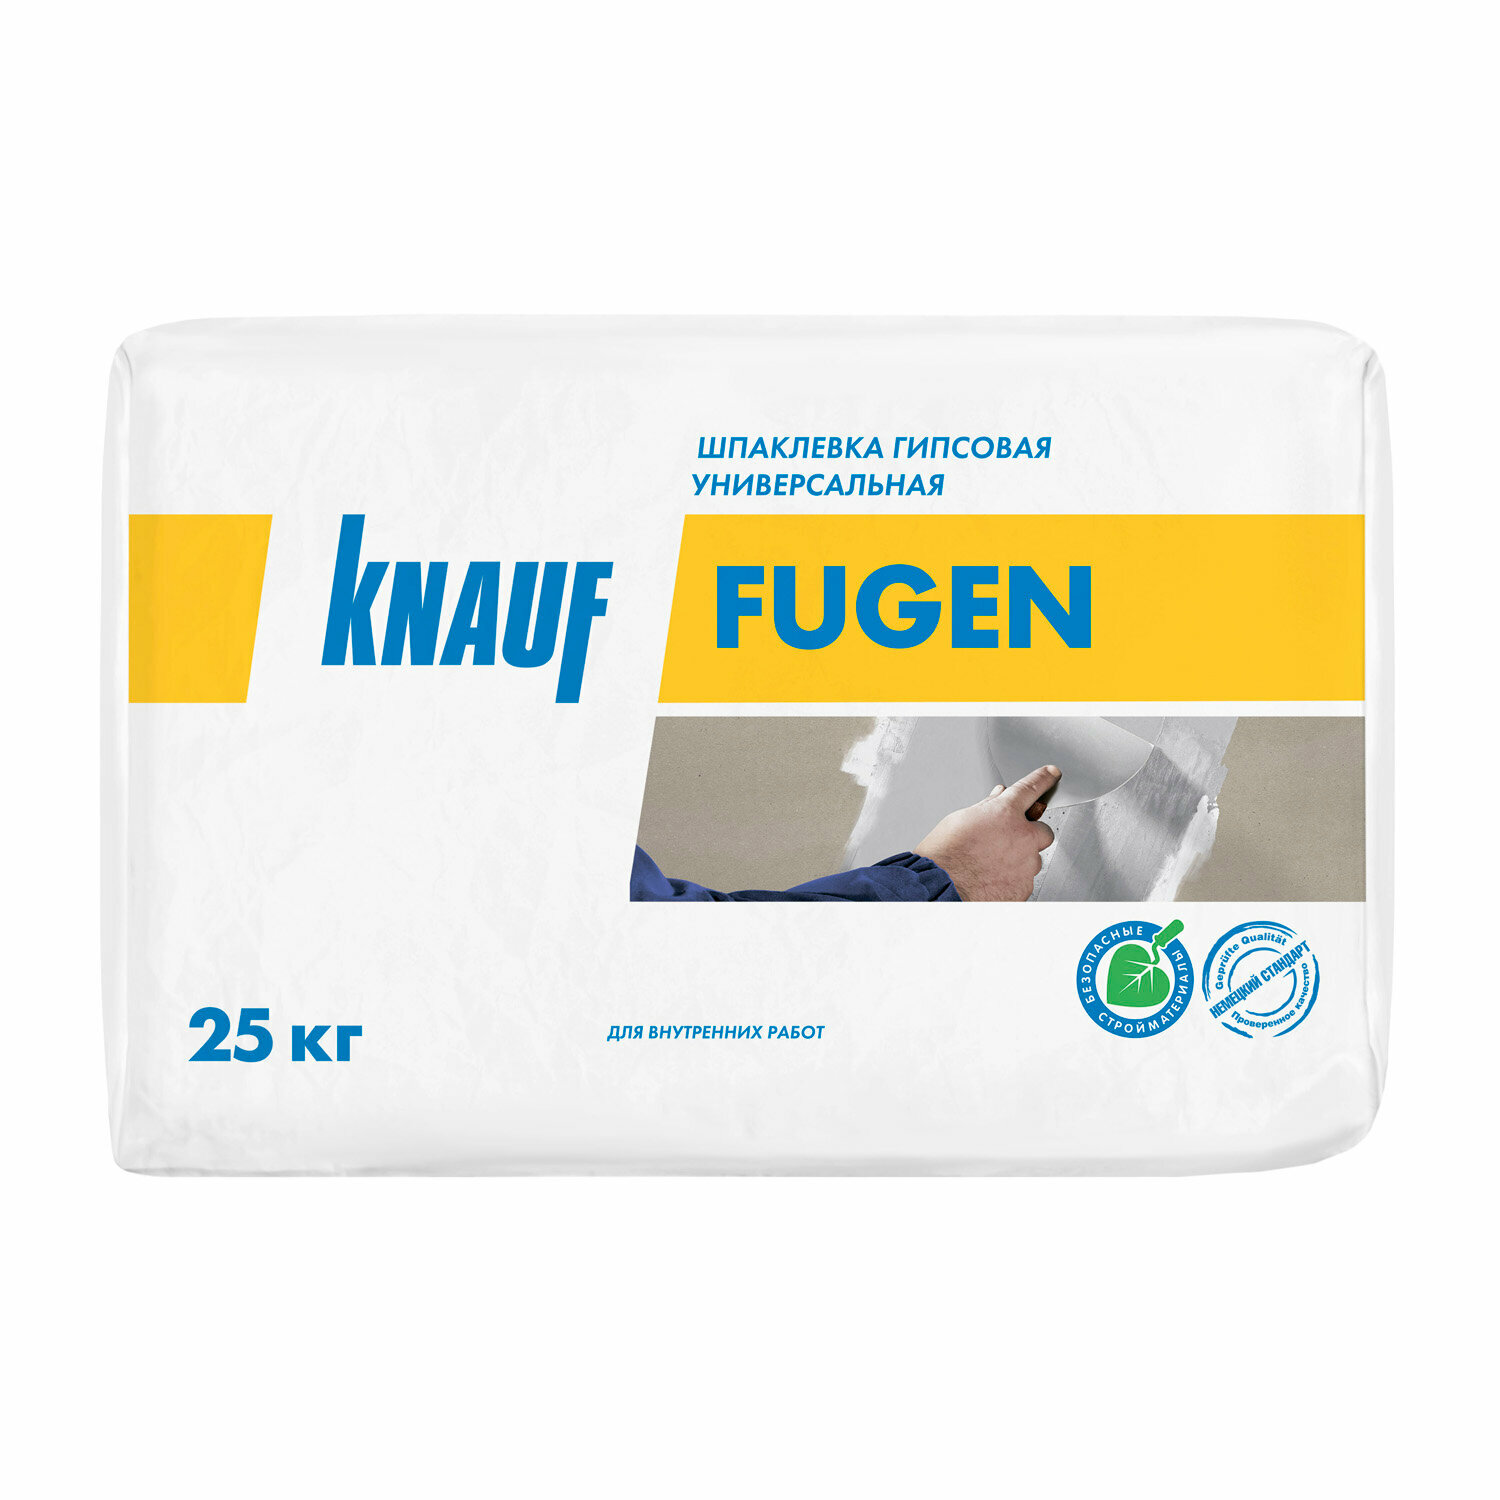 Шпатлевка гипсовая Knauf Фуген 25 кг